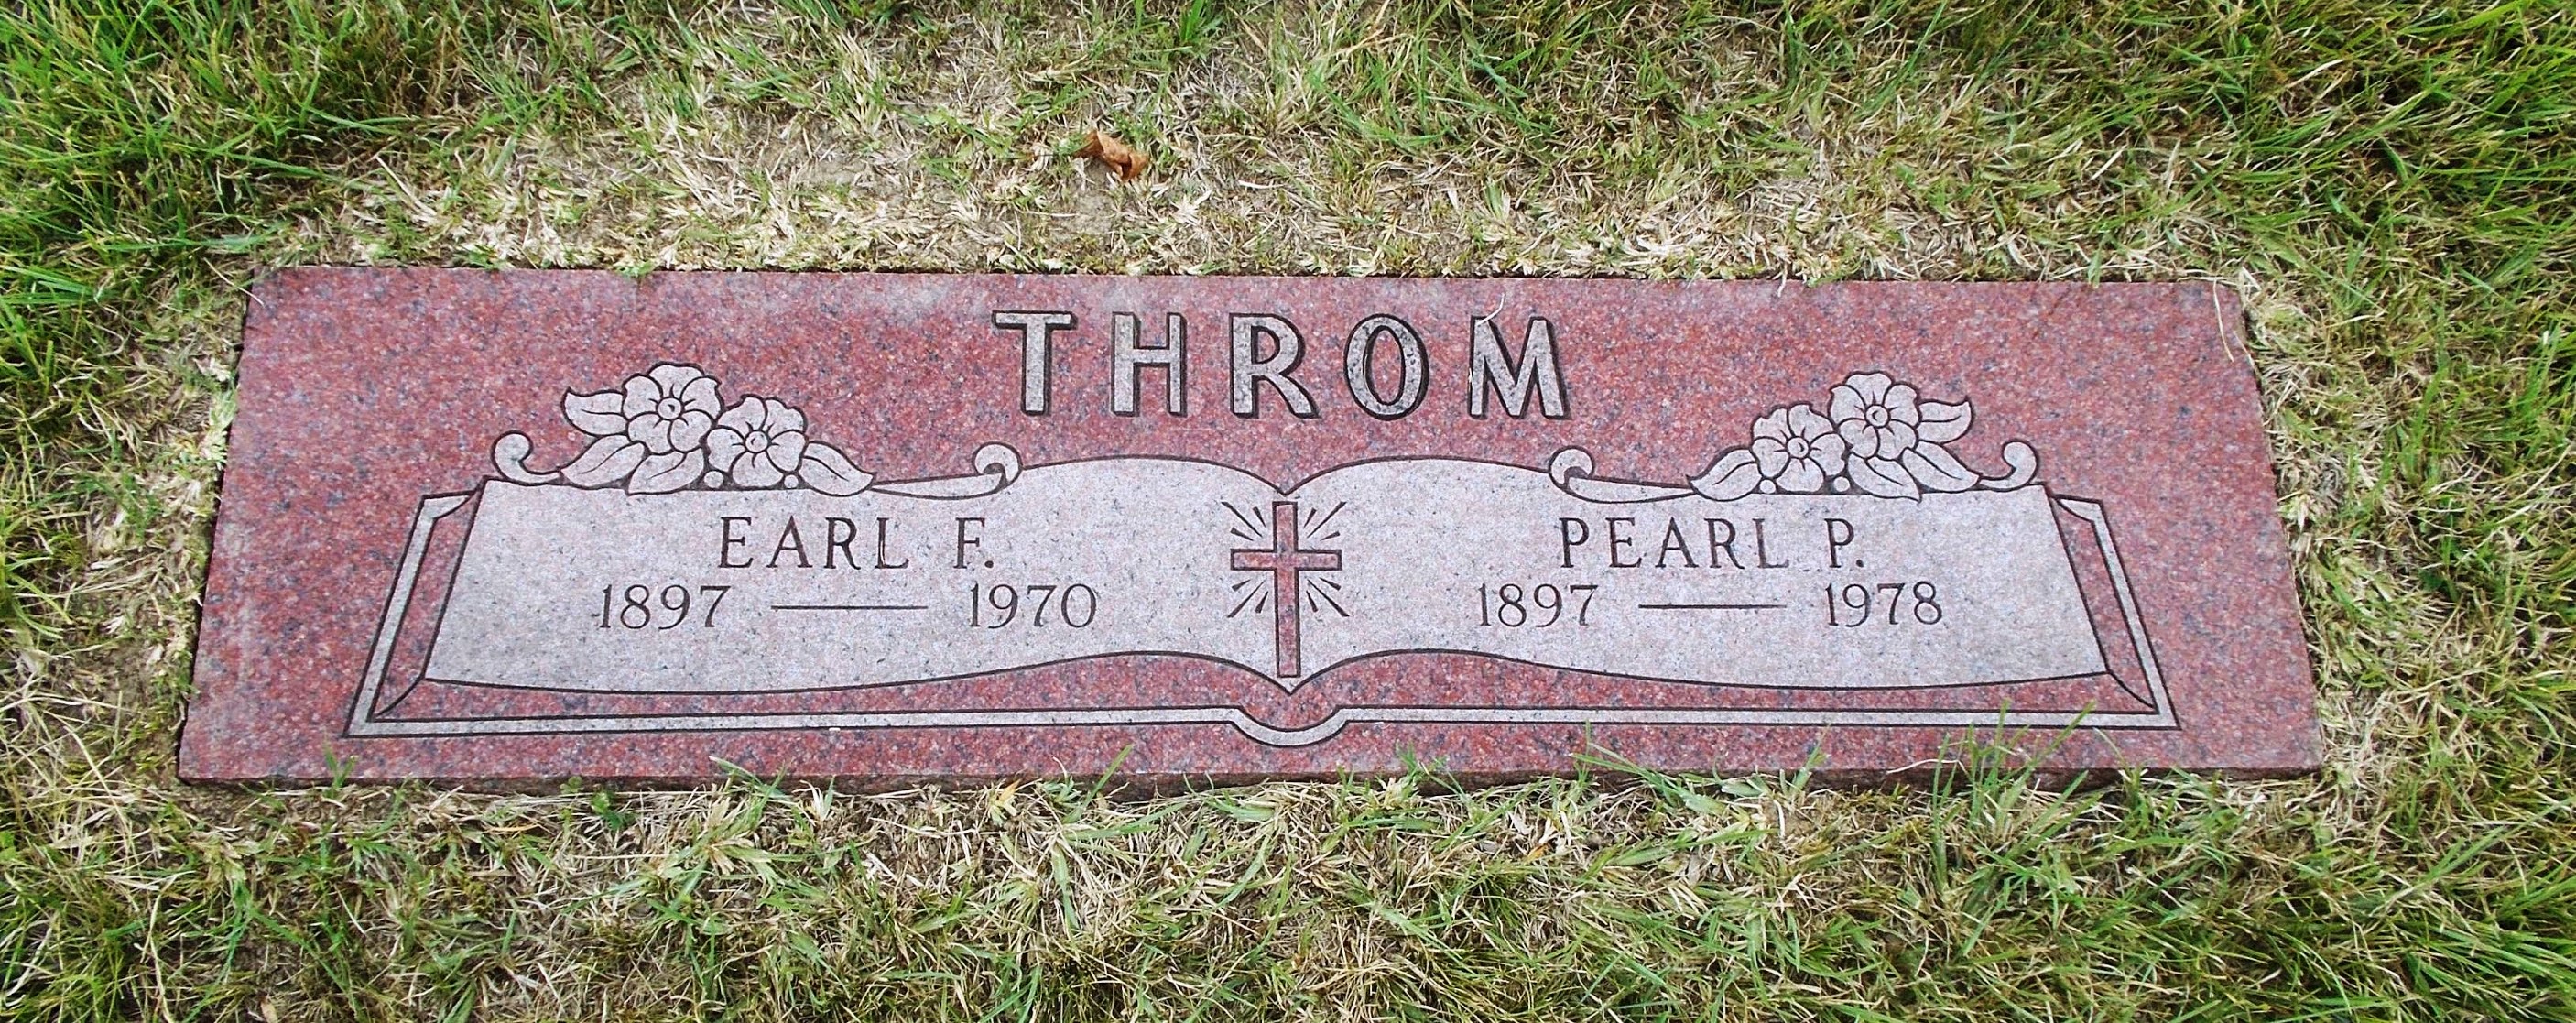 Earl F Throm